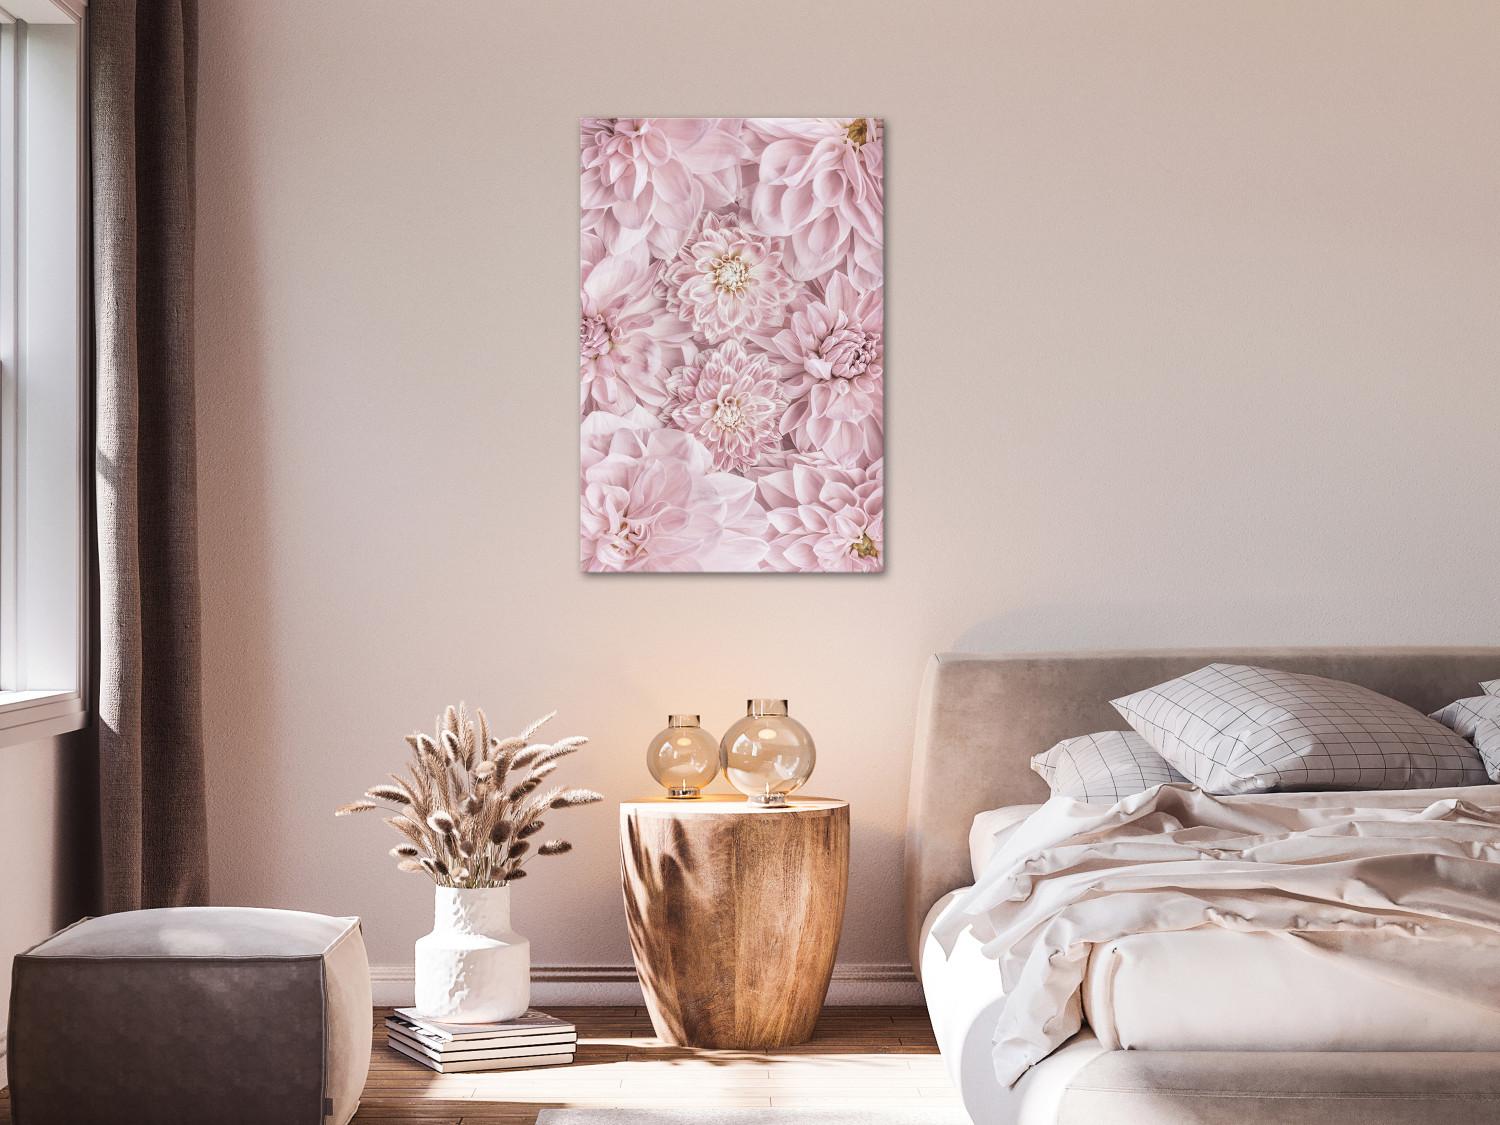 Cuadro Tocado de flores - ramo de plantas frescas de color rosa